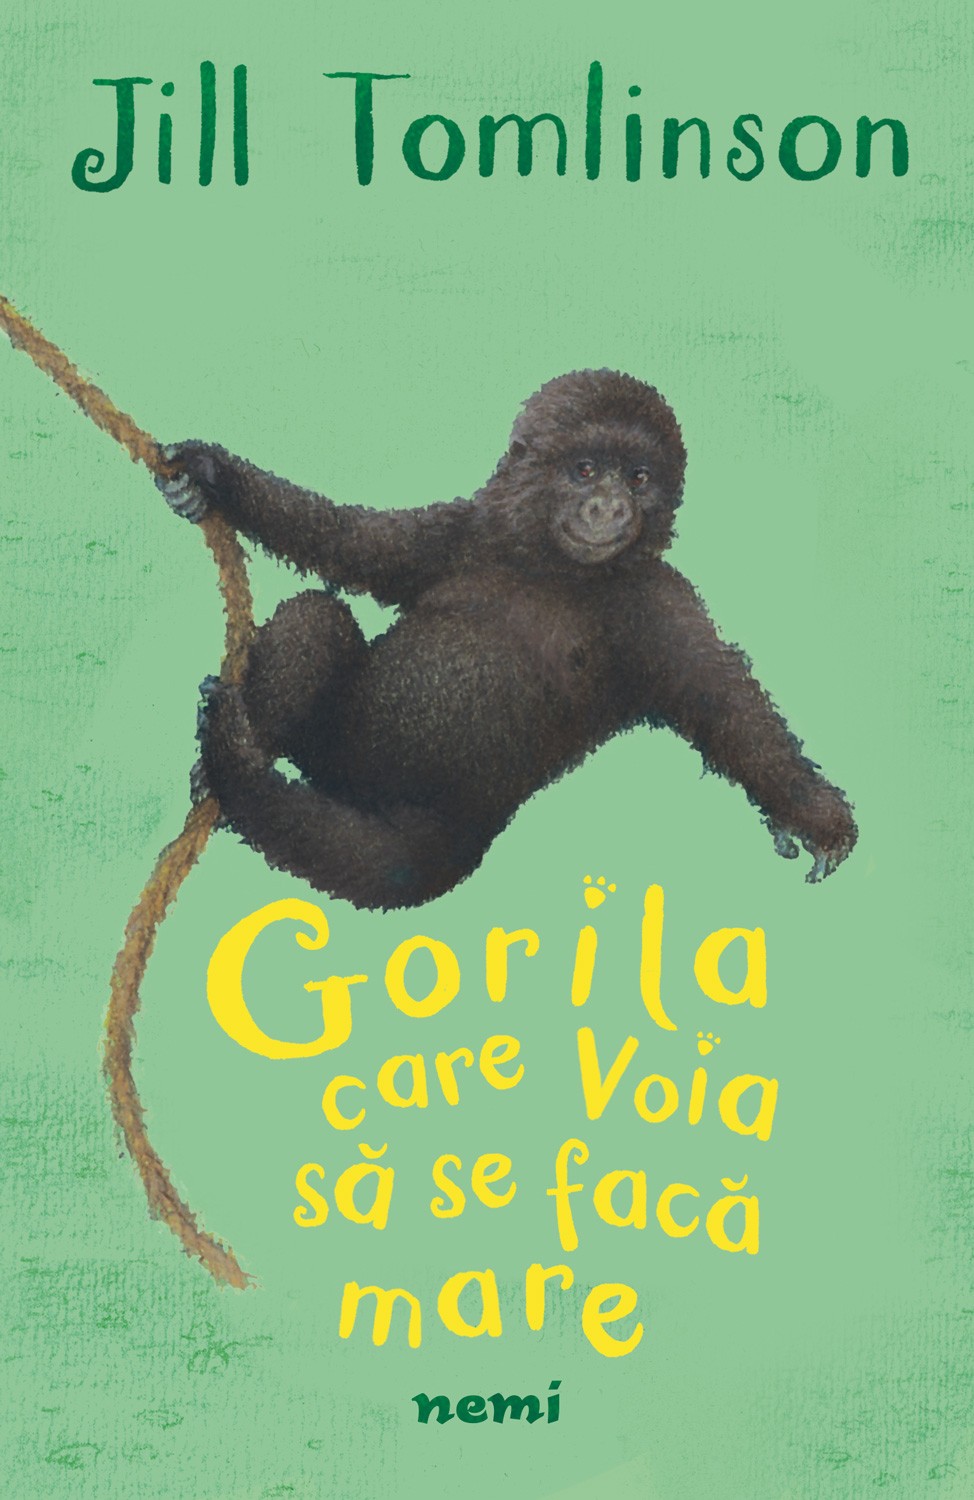 Gorila care voia sa se faca mare - Jill Tomlinson